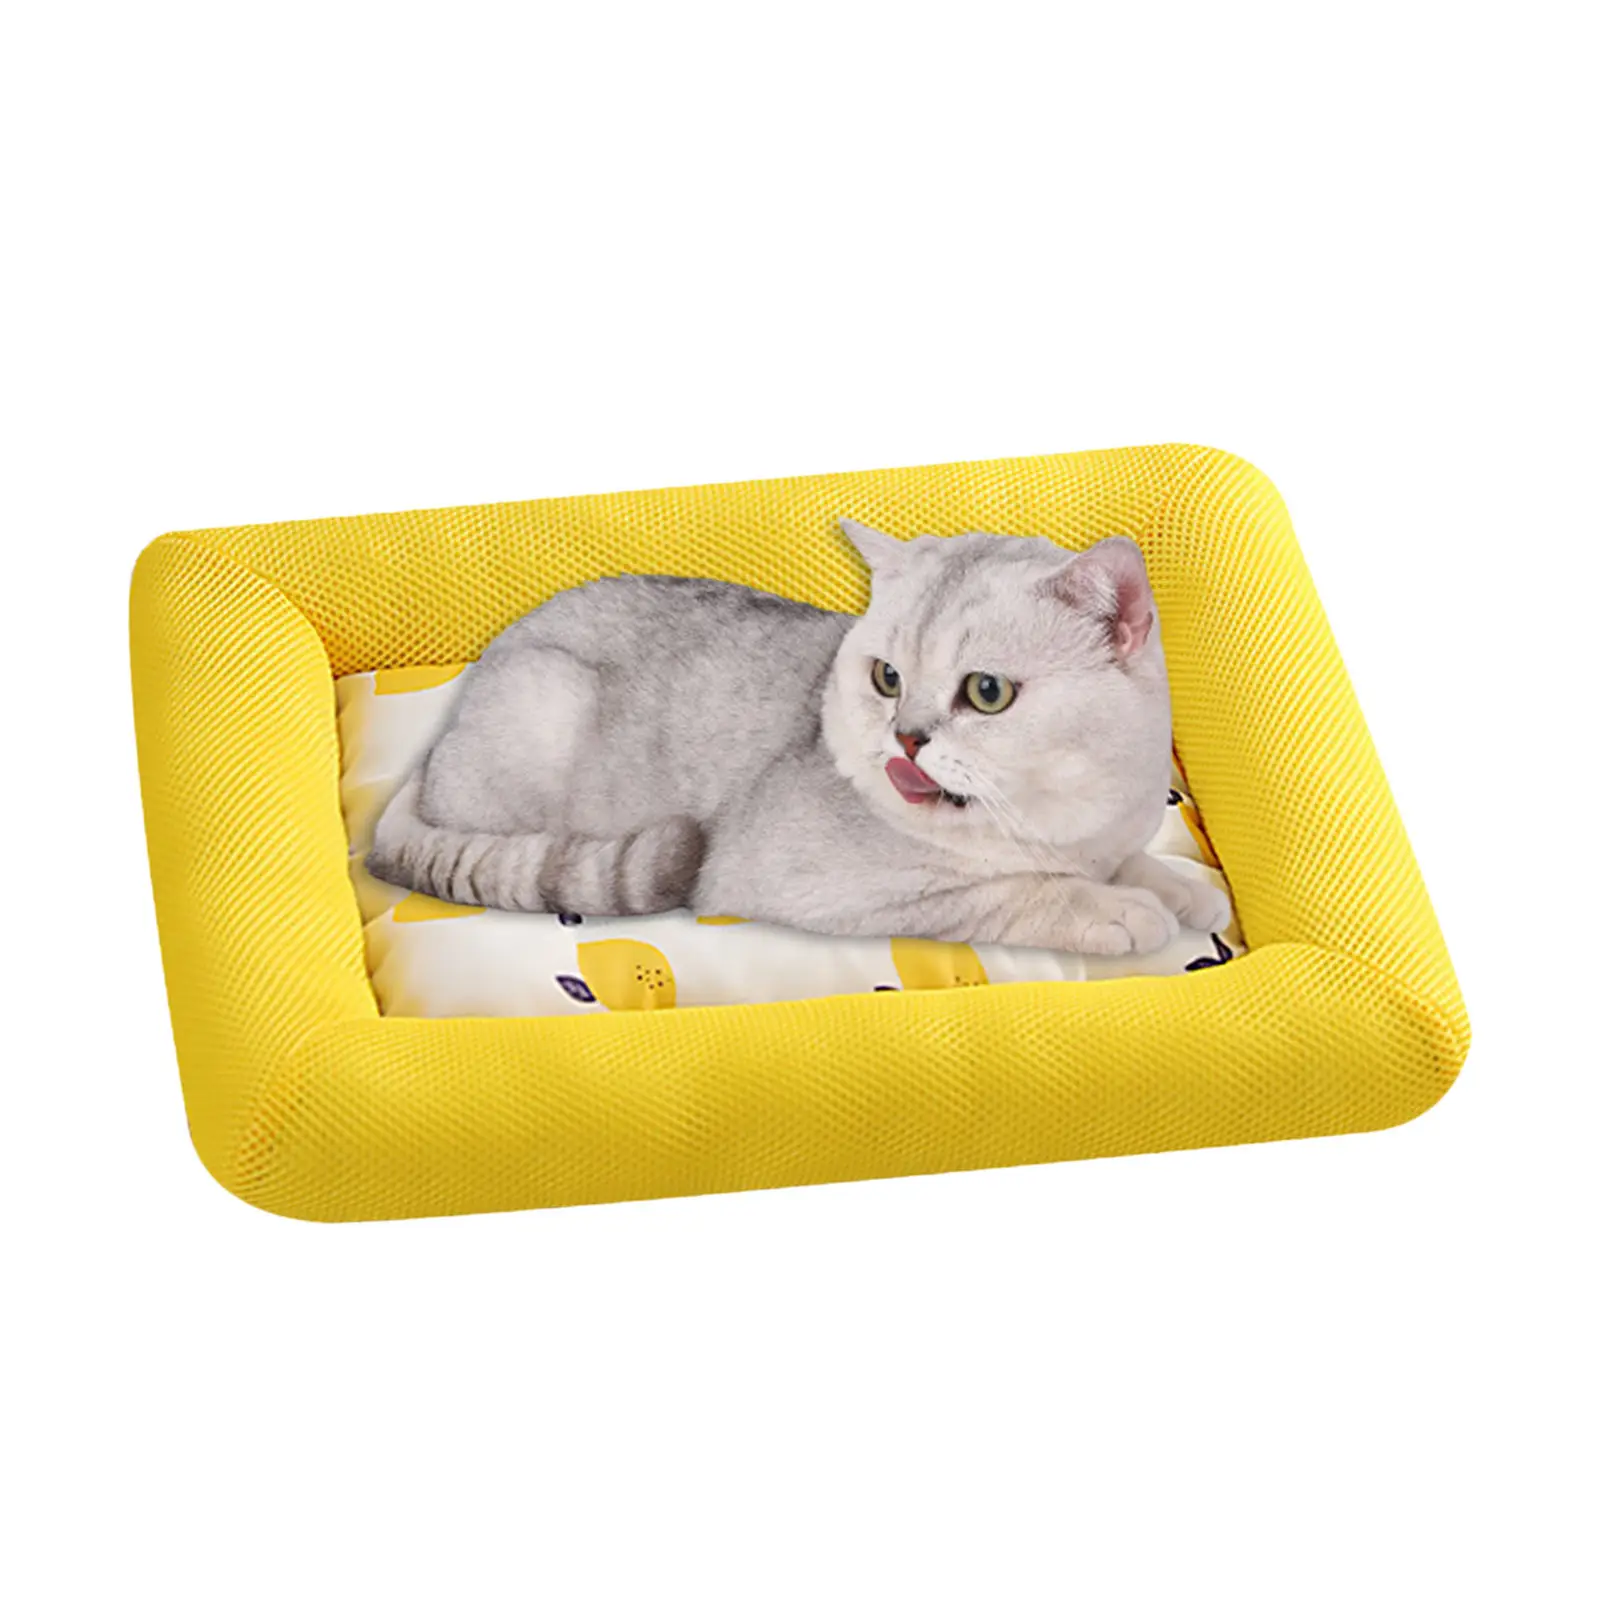 Waterproof Pet Dog Cooling Mat Comfortable Bed Portable Indoor Outdoor Cats Kitten Sleeping Cushion Kennel Chio